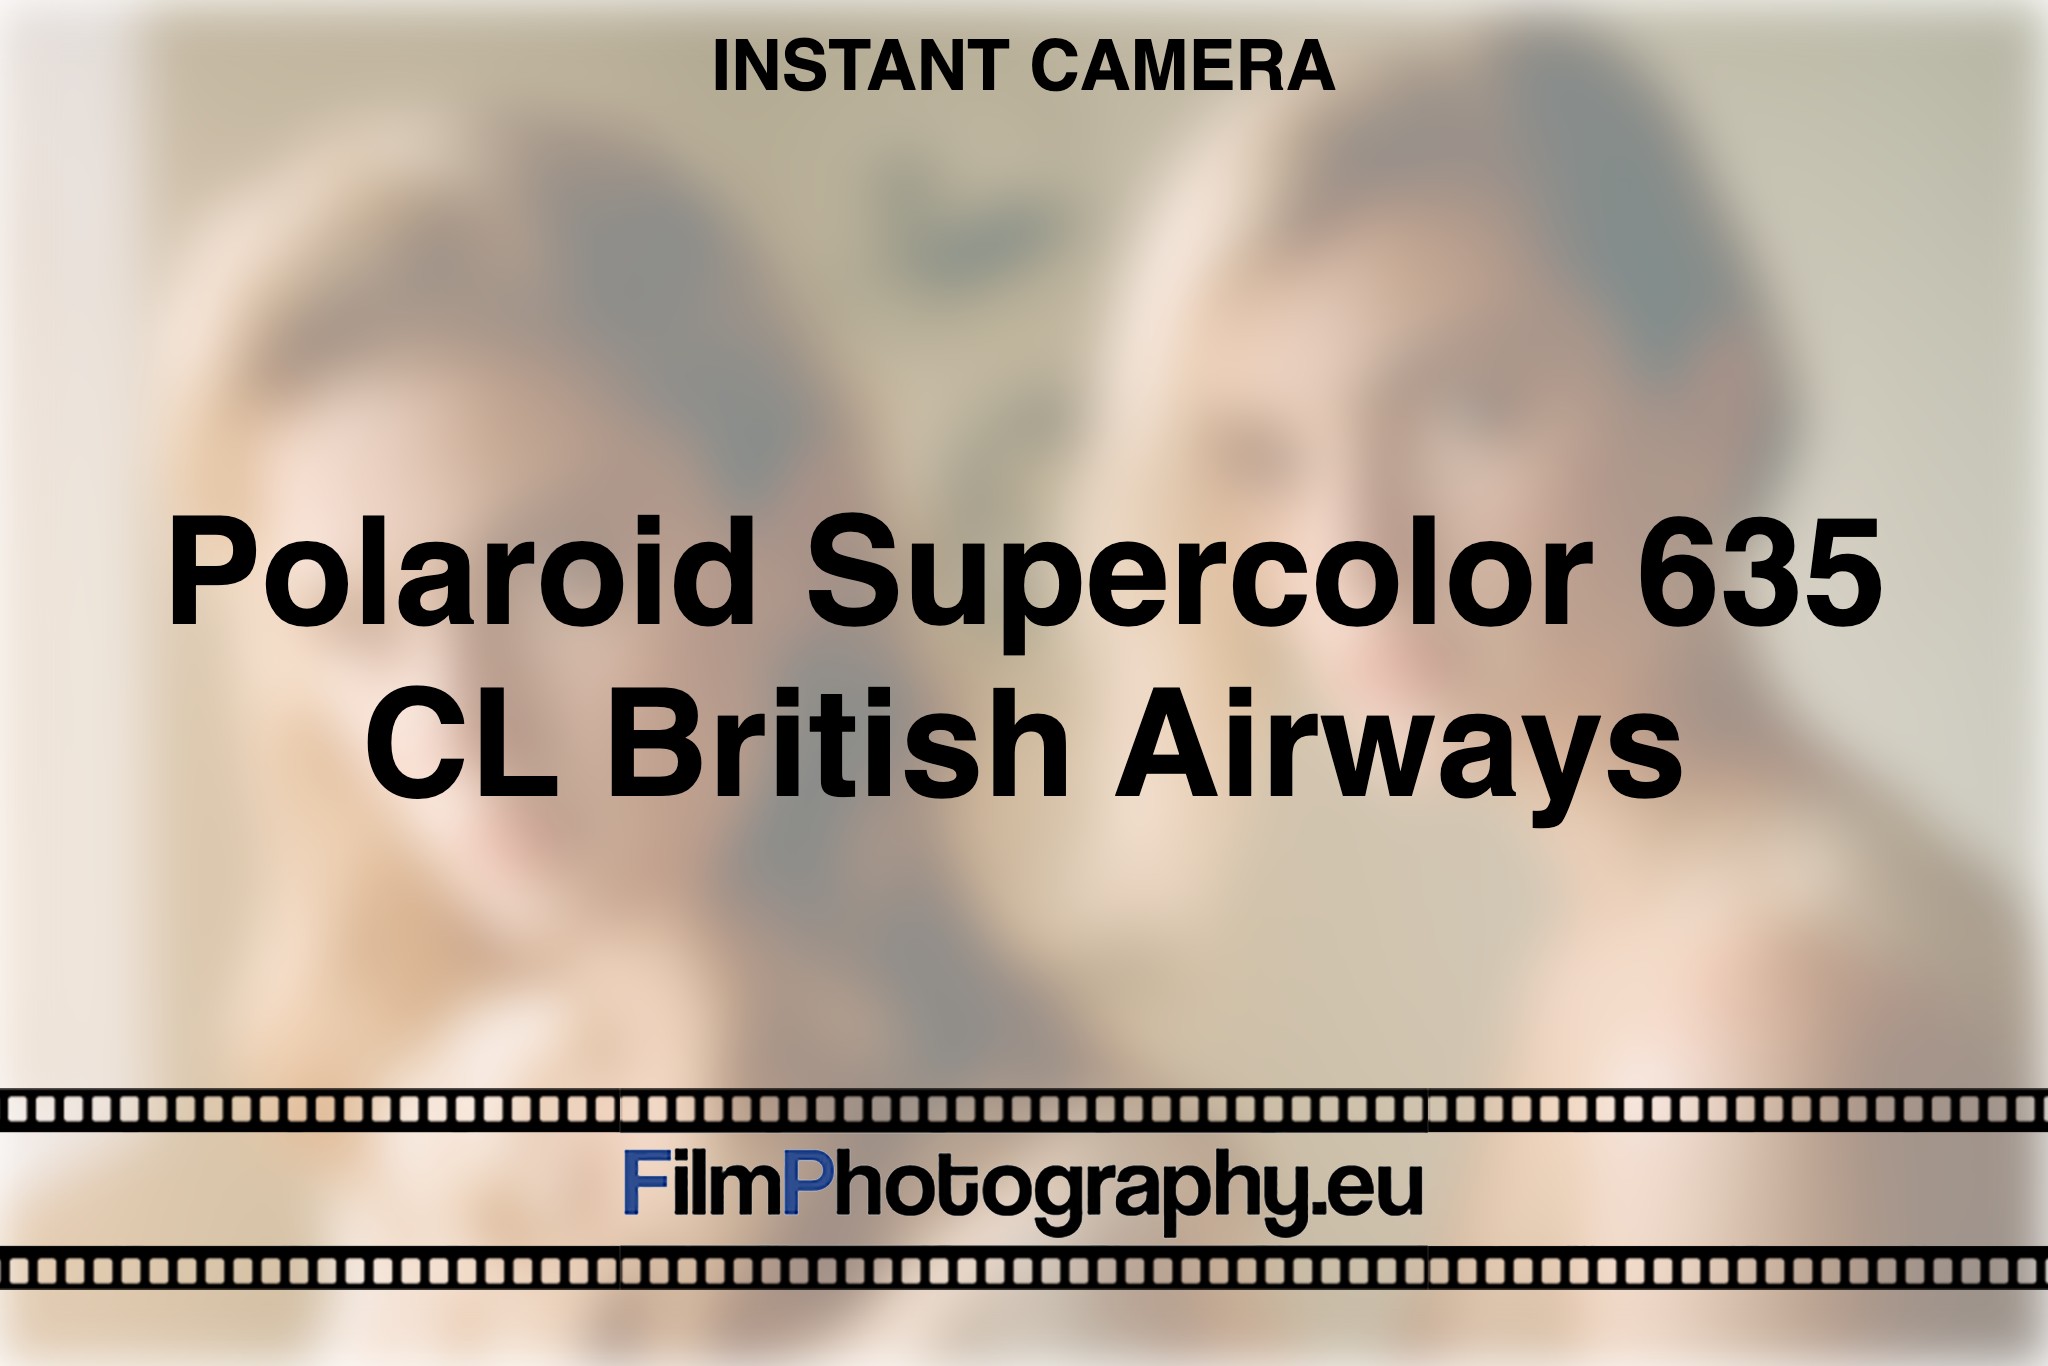 polaroid-supercolor-635-cl-british-airways-instant-camera-bnv